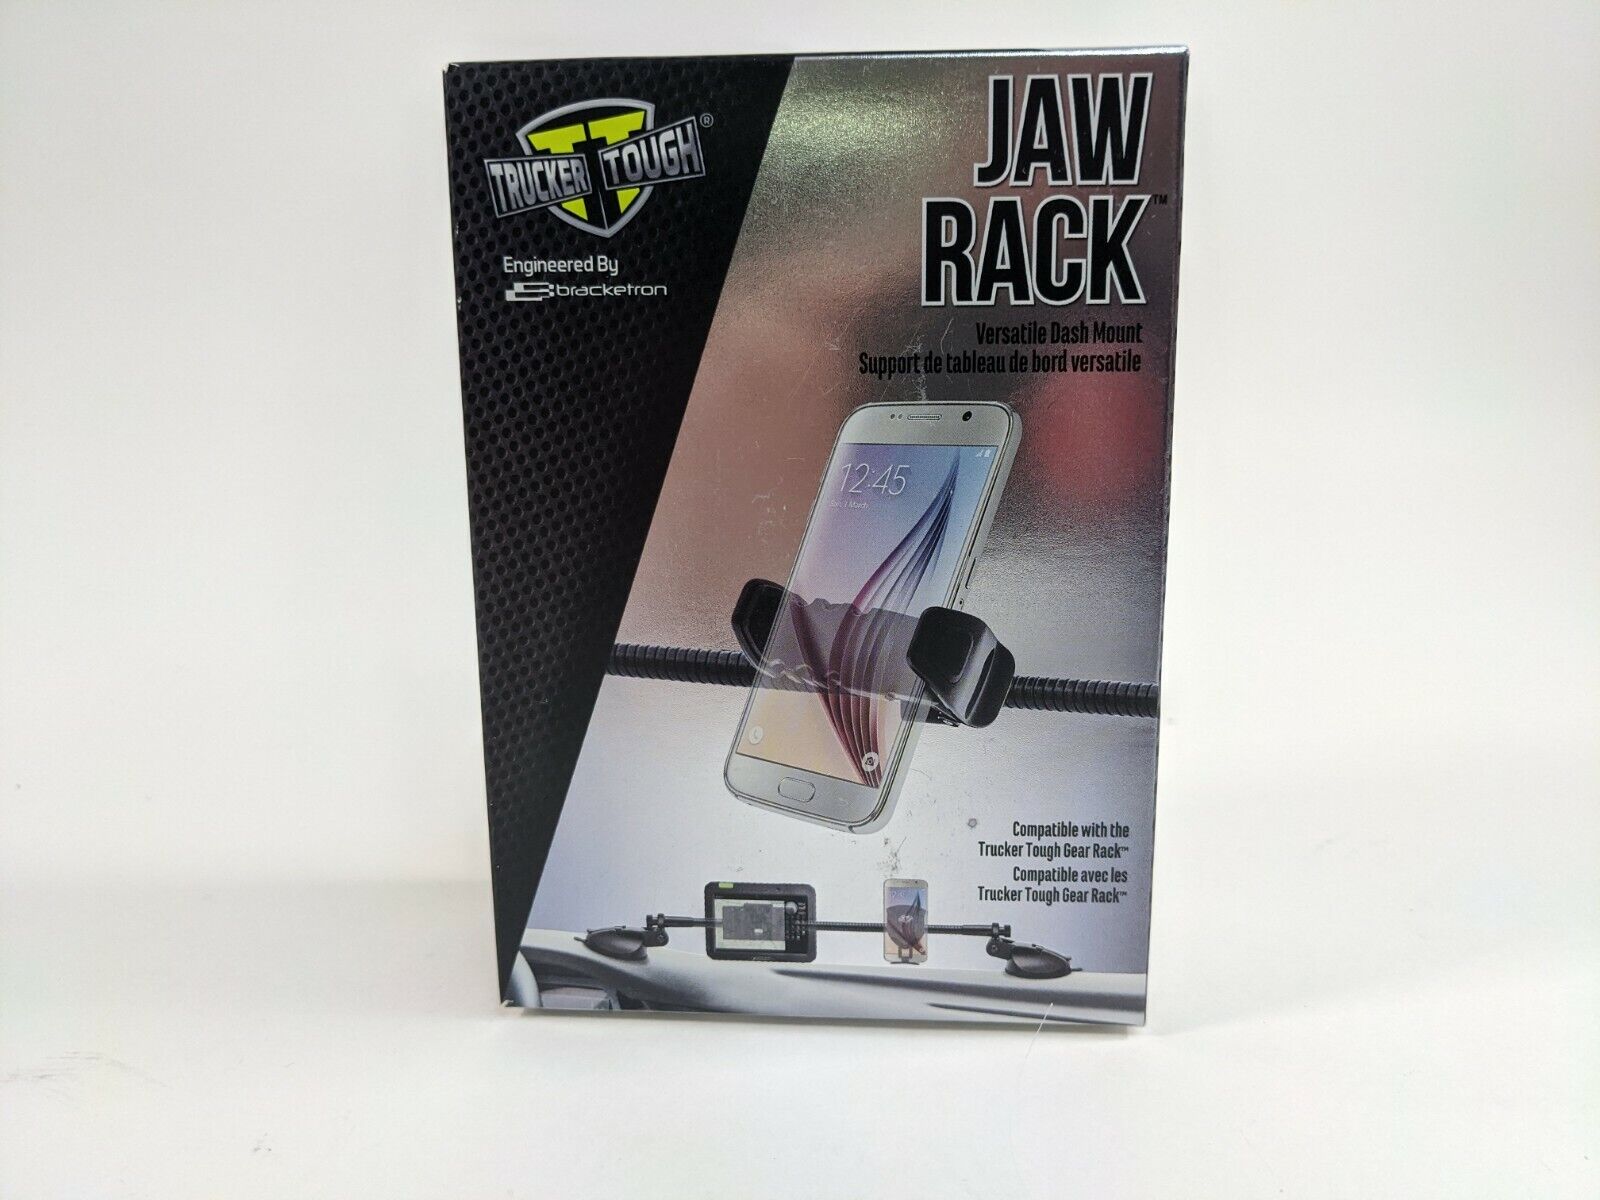 Bracketron Trucker Tough Jaw Rack mount TT1-859-2 Versatile Dash Mount